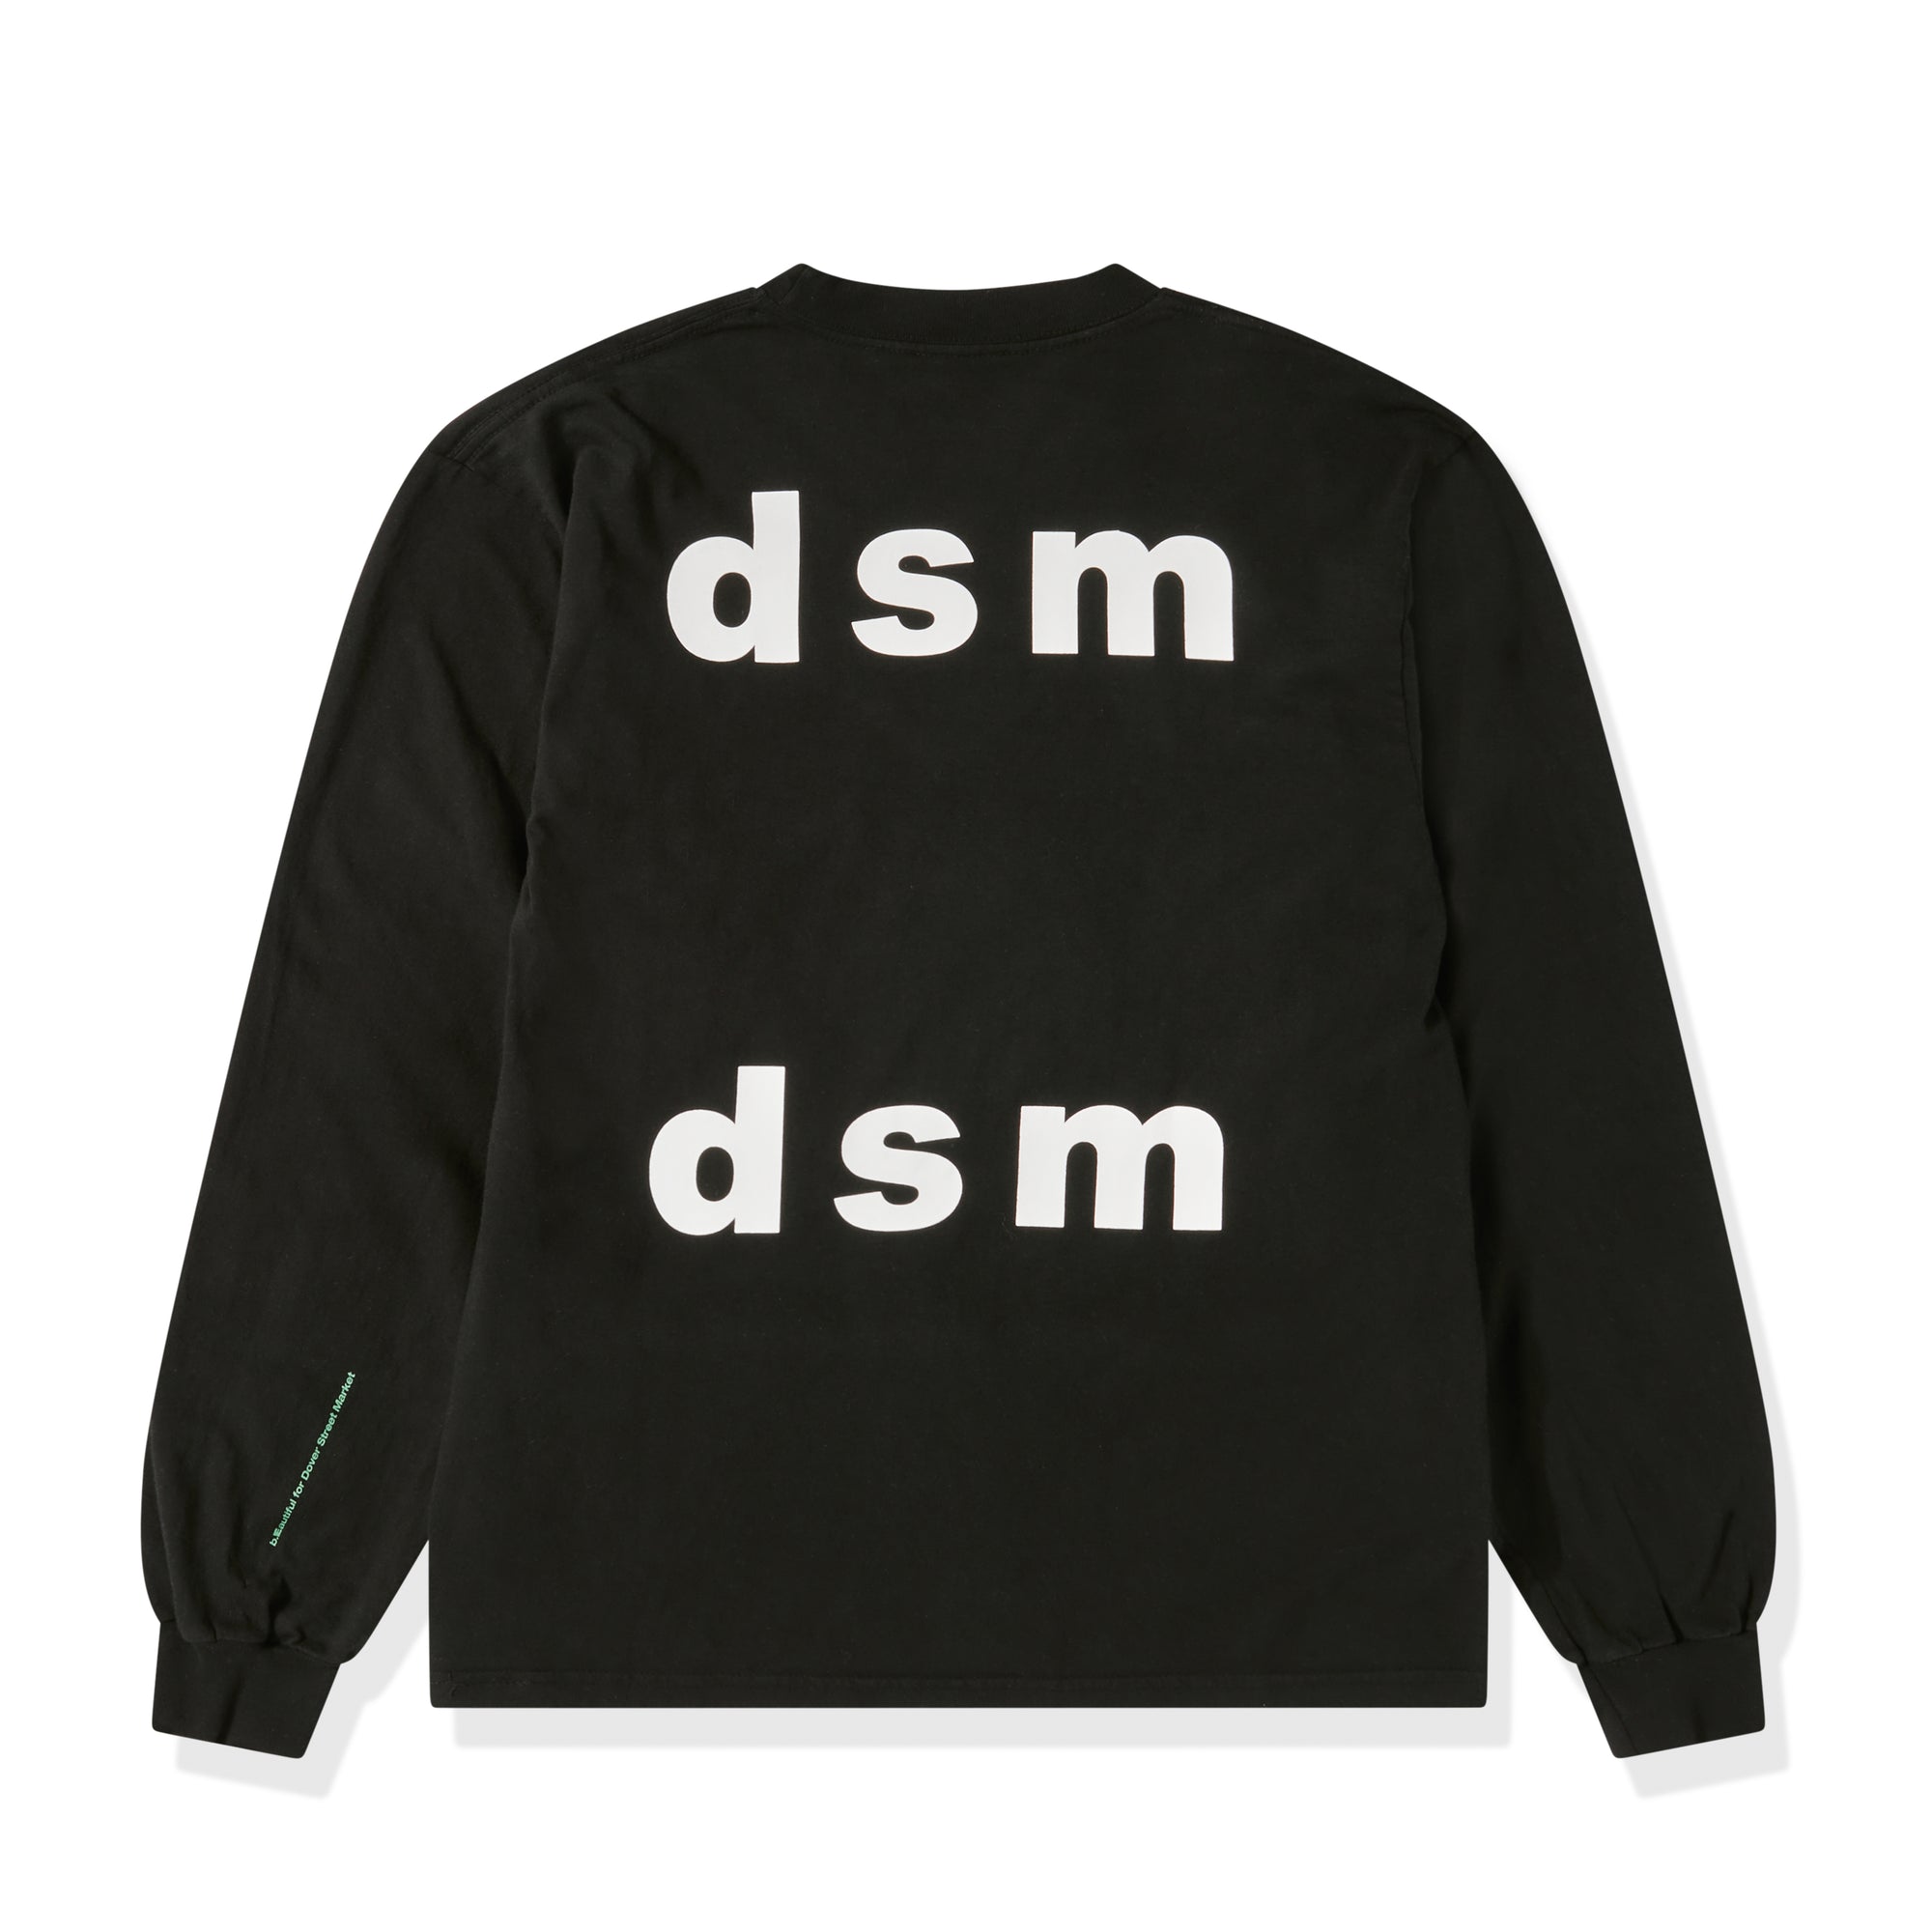 b.Eautiful - DSM DSM-DSM Long Sleeve T-Shirt - (Black) view 2